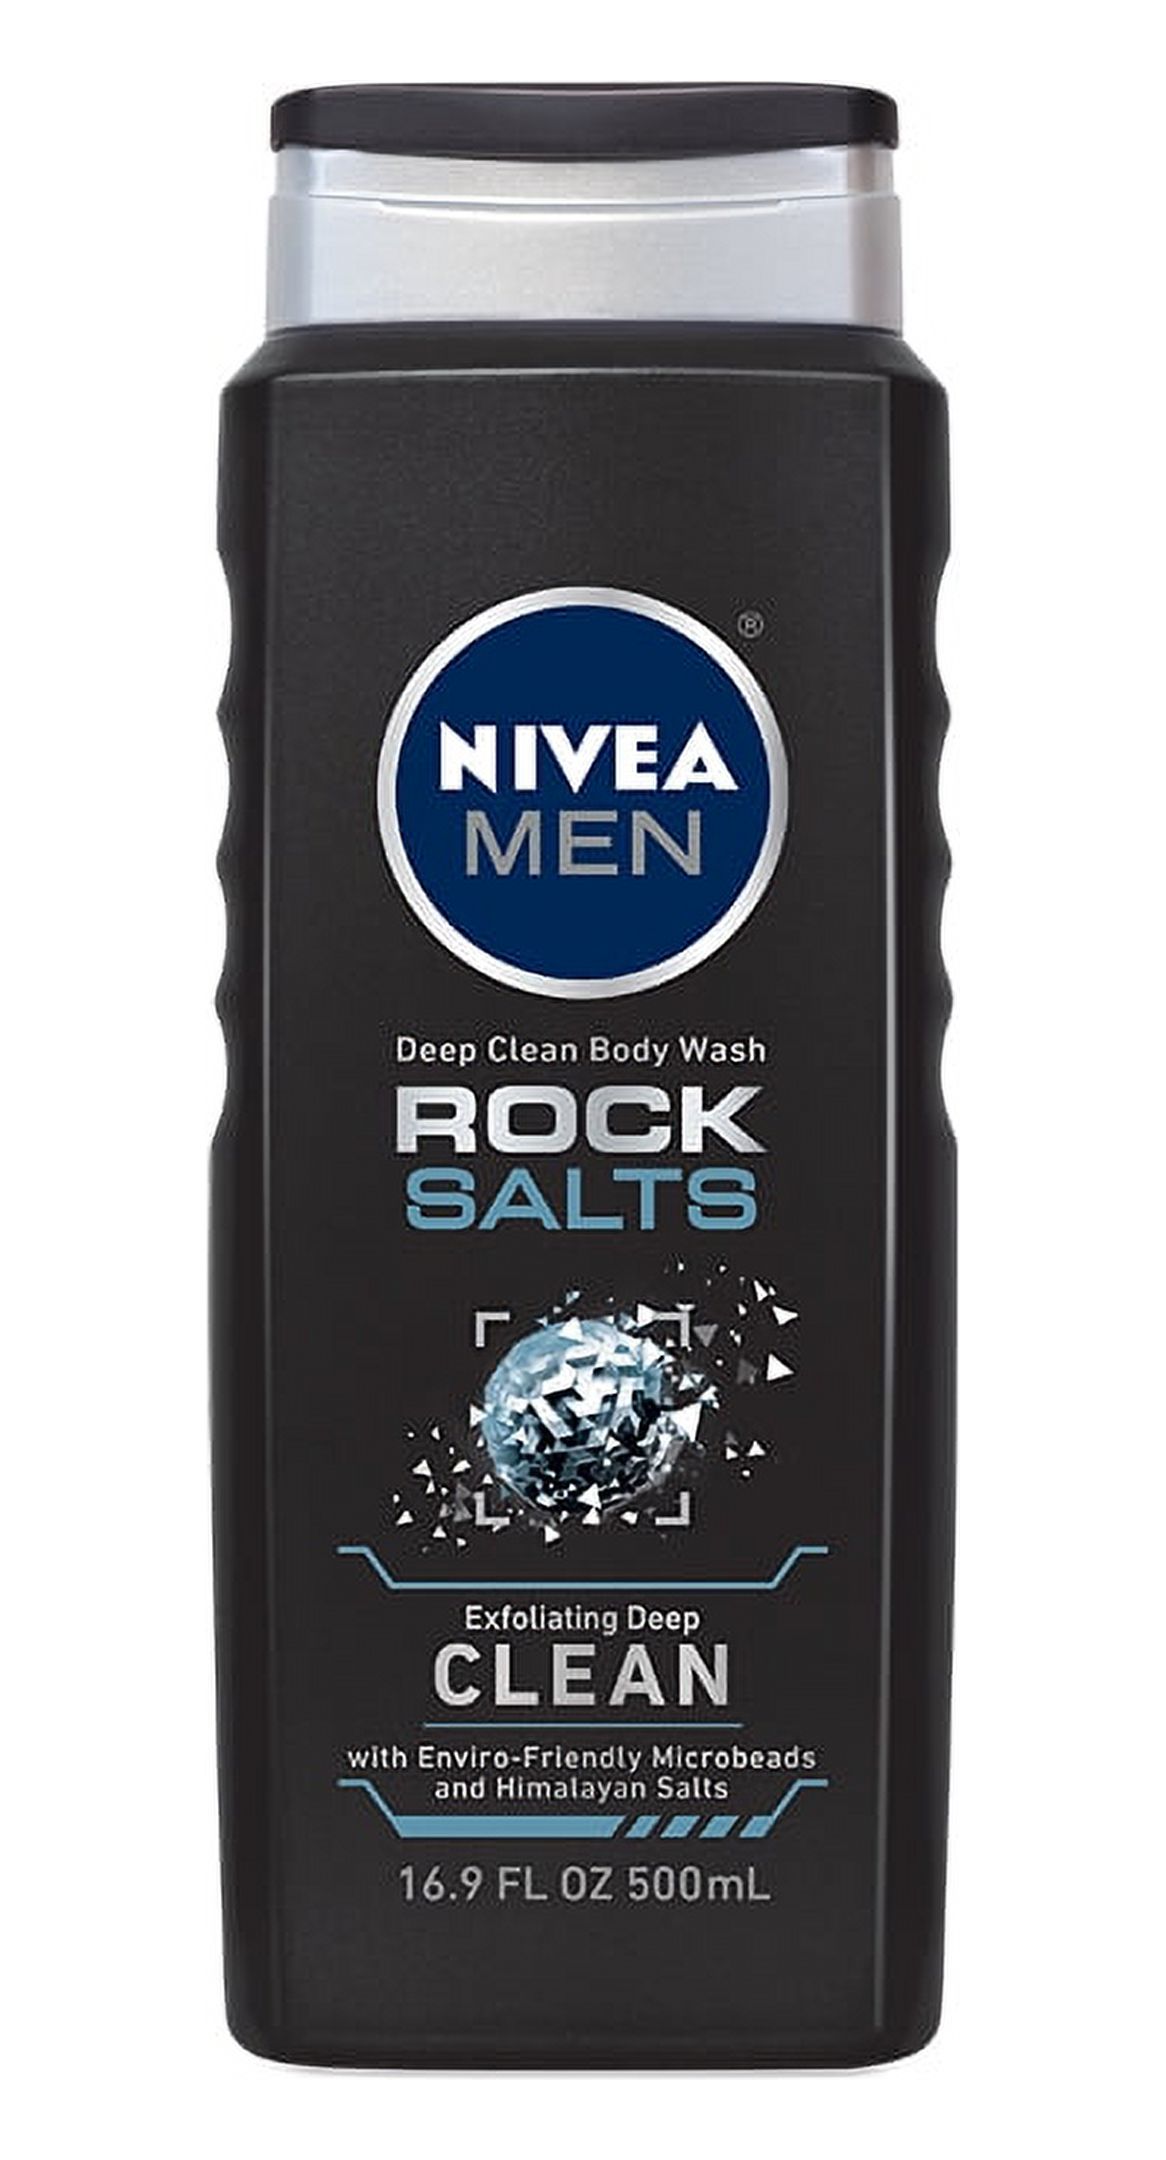 NIVEA Men Rock Salts Body Wash 16.9 Oz. - image 1 of 4